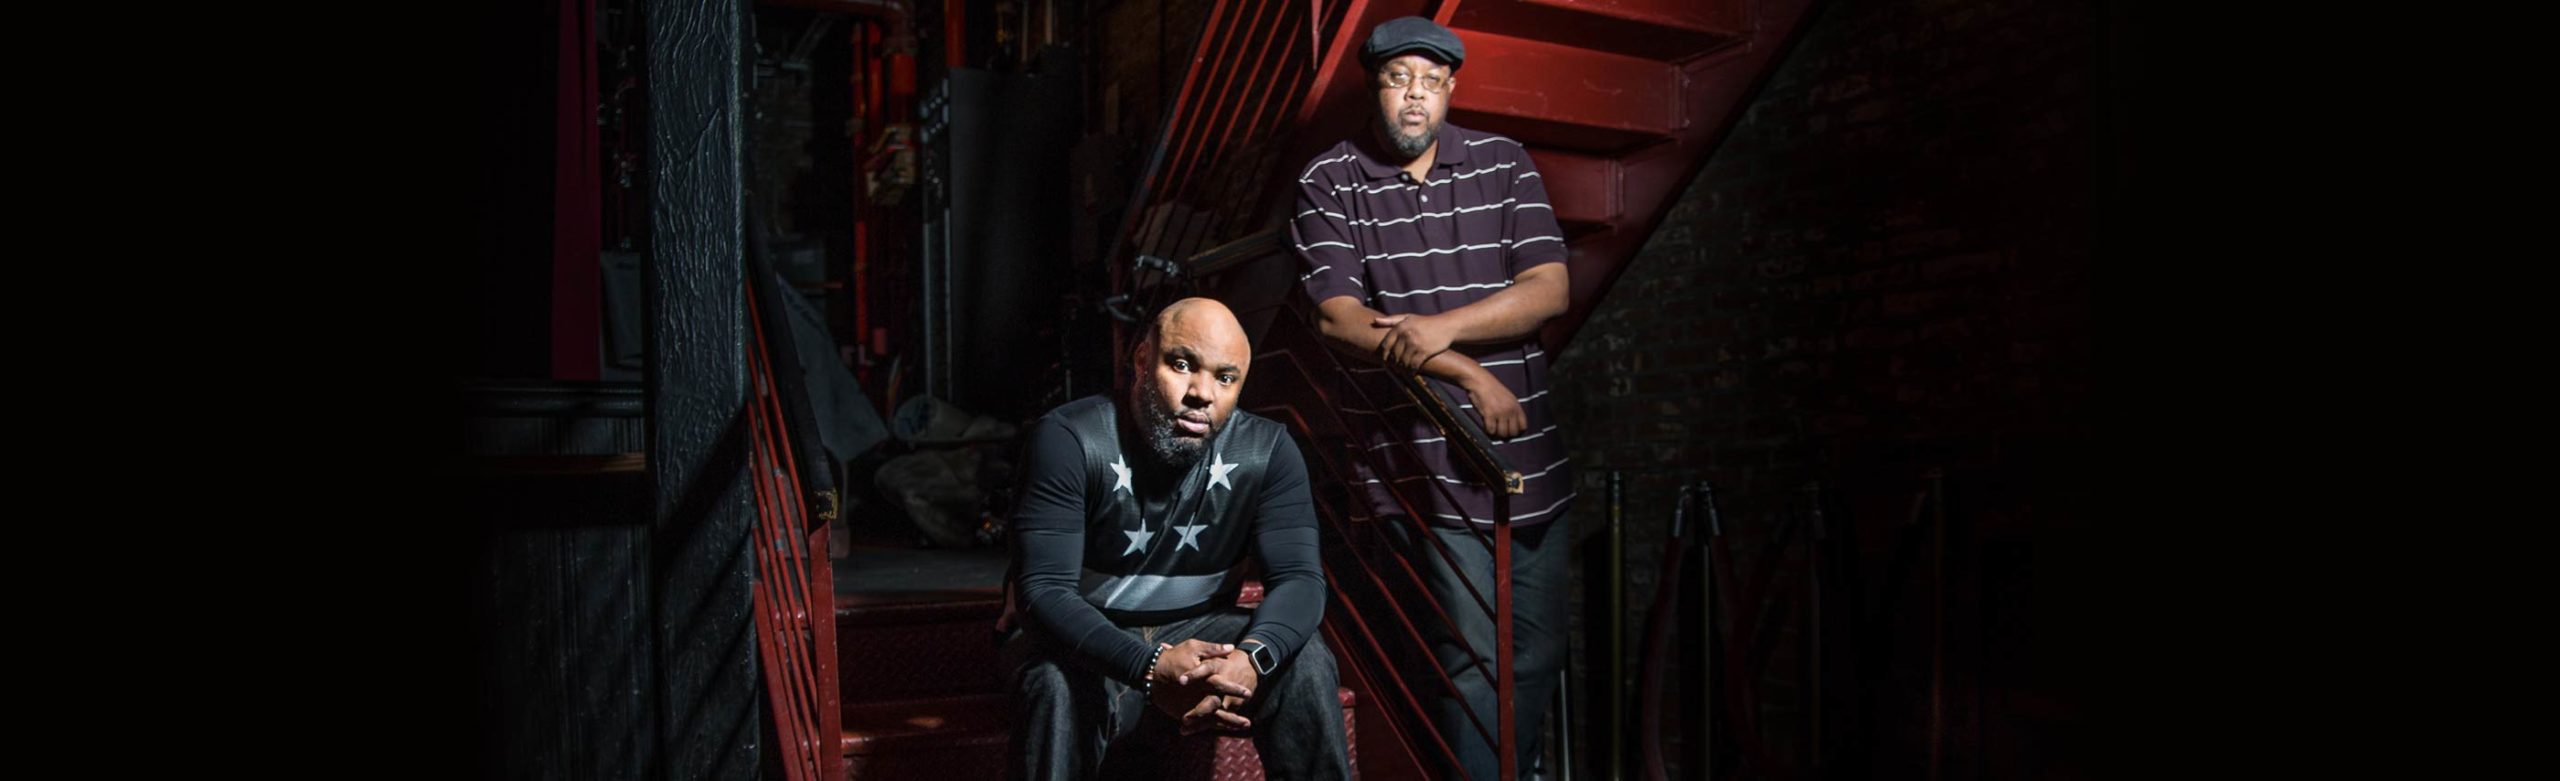 JUST ANNOUNCED: Hip Hop Duo Blackalicious to Make Triumphant Return to Missoula Image